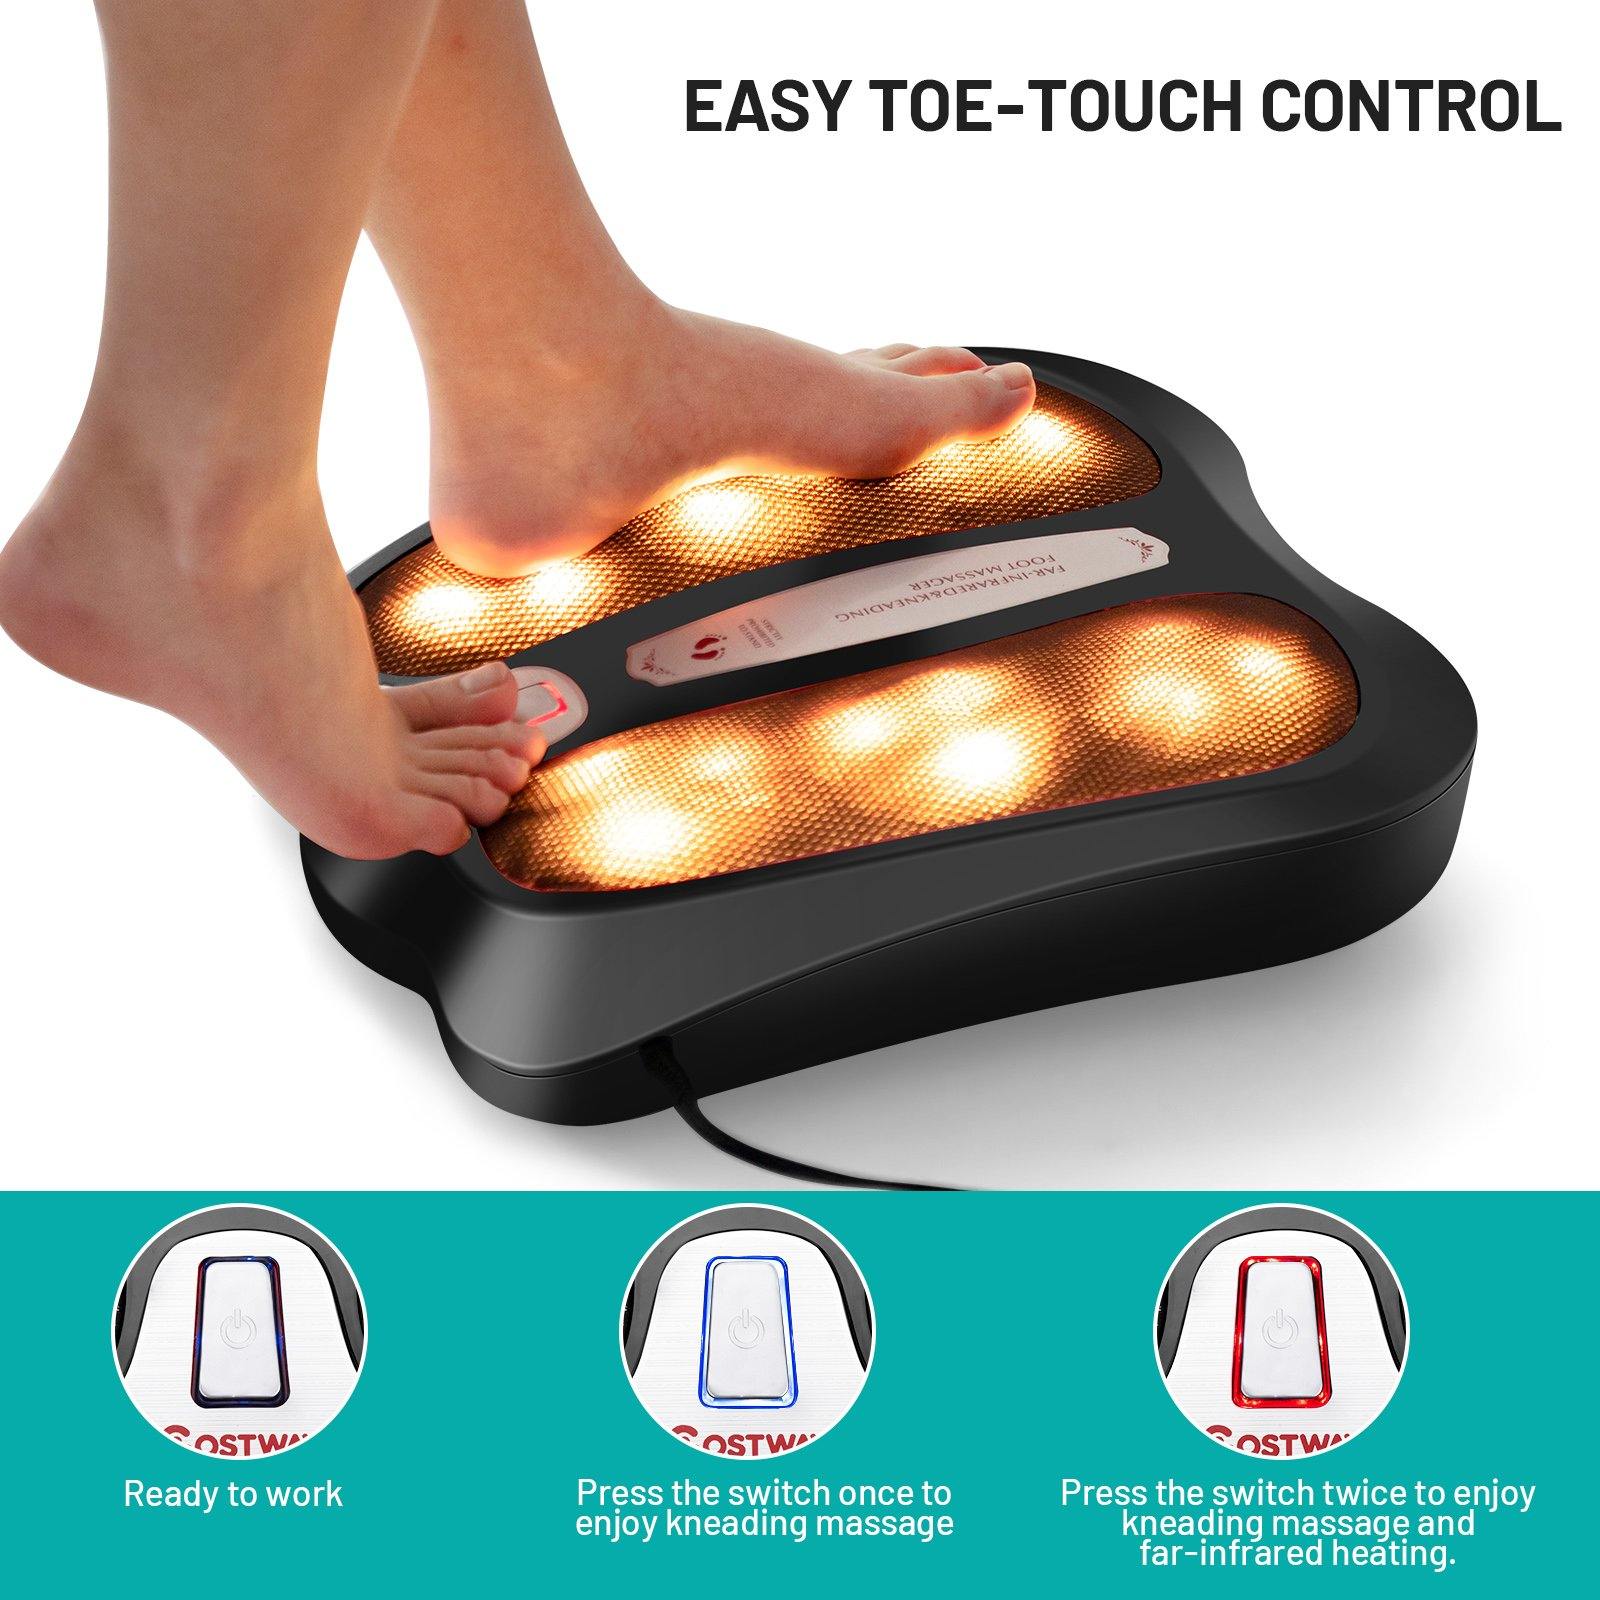 Giantex Foot Massager Shiatsu Feet Spa with Infrared Heating&18 Massage Nodes, Black - Giantexus